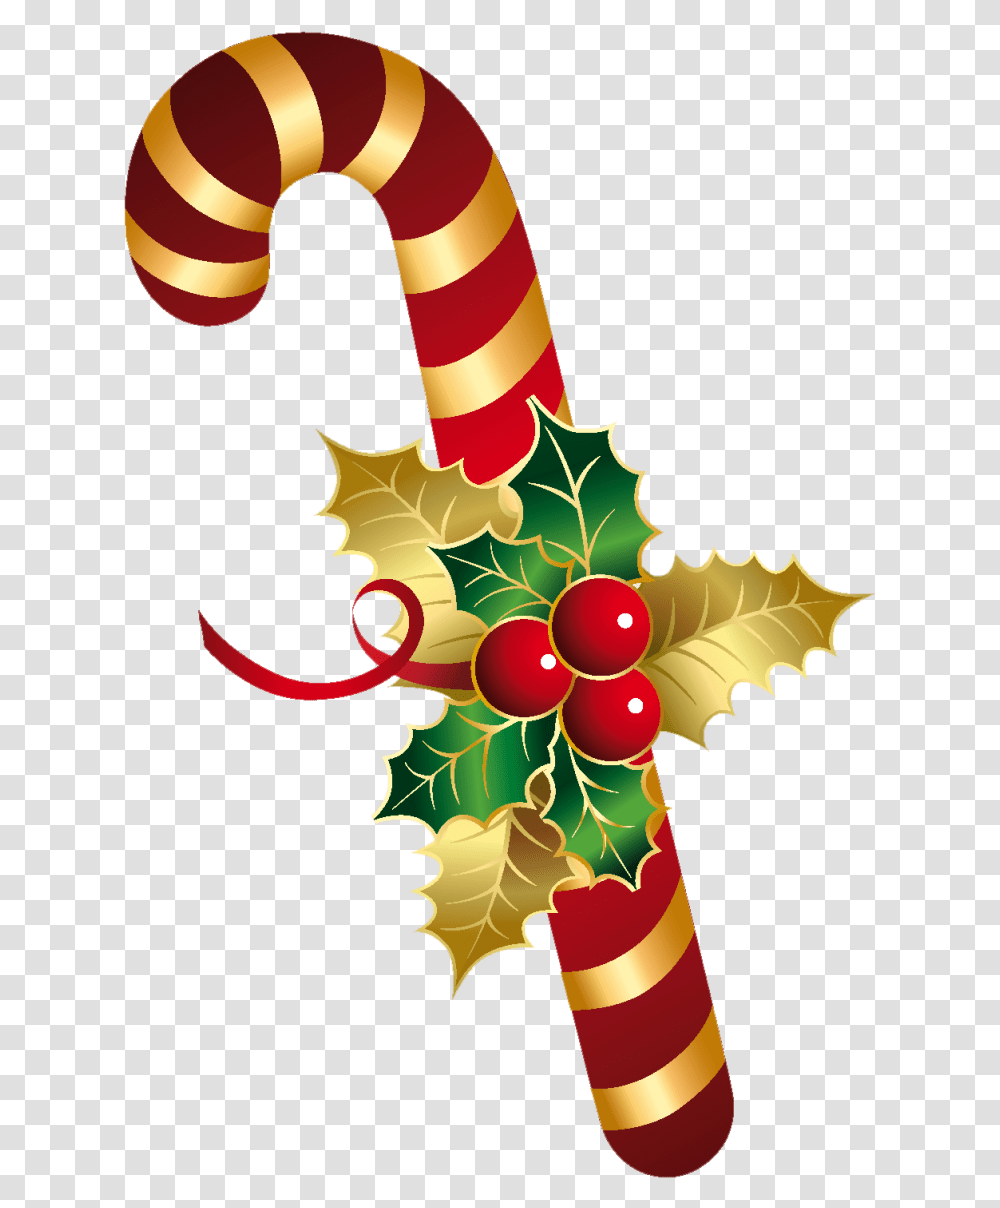 Christmas Sugar Cane With Mistletoe Image Candy Cane Clip Art, Plant, Tree, Diwali Transparent Png